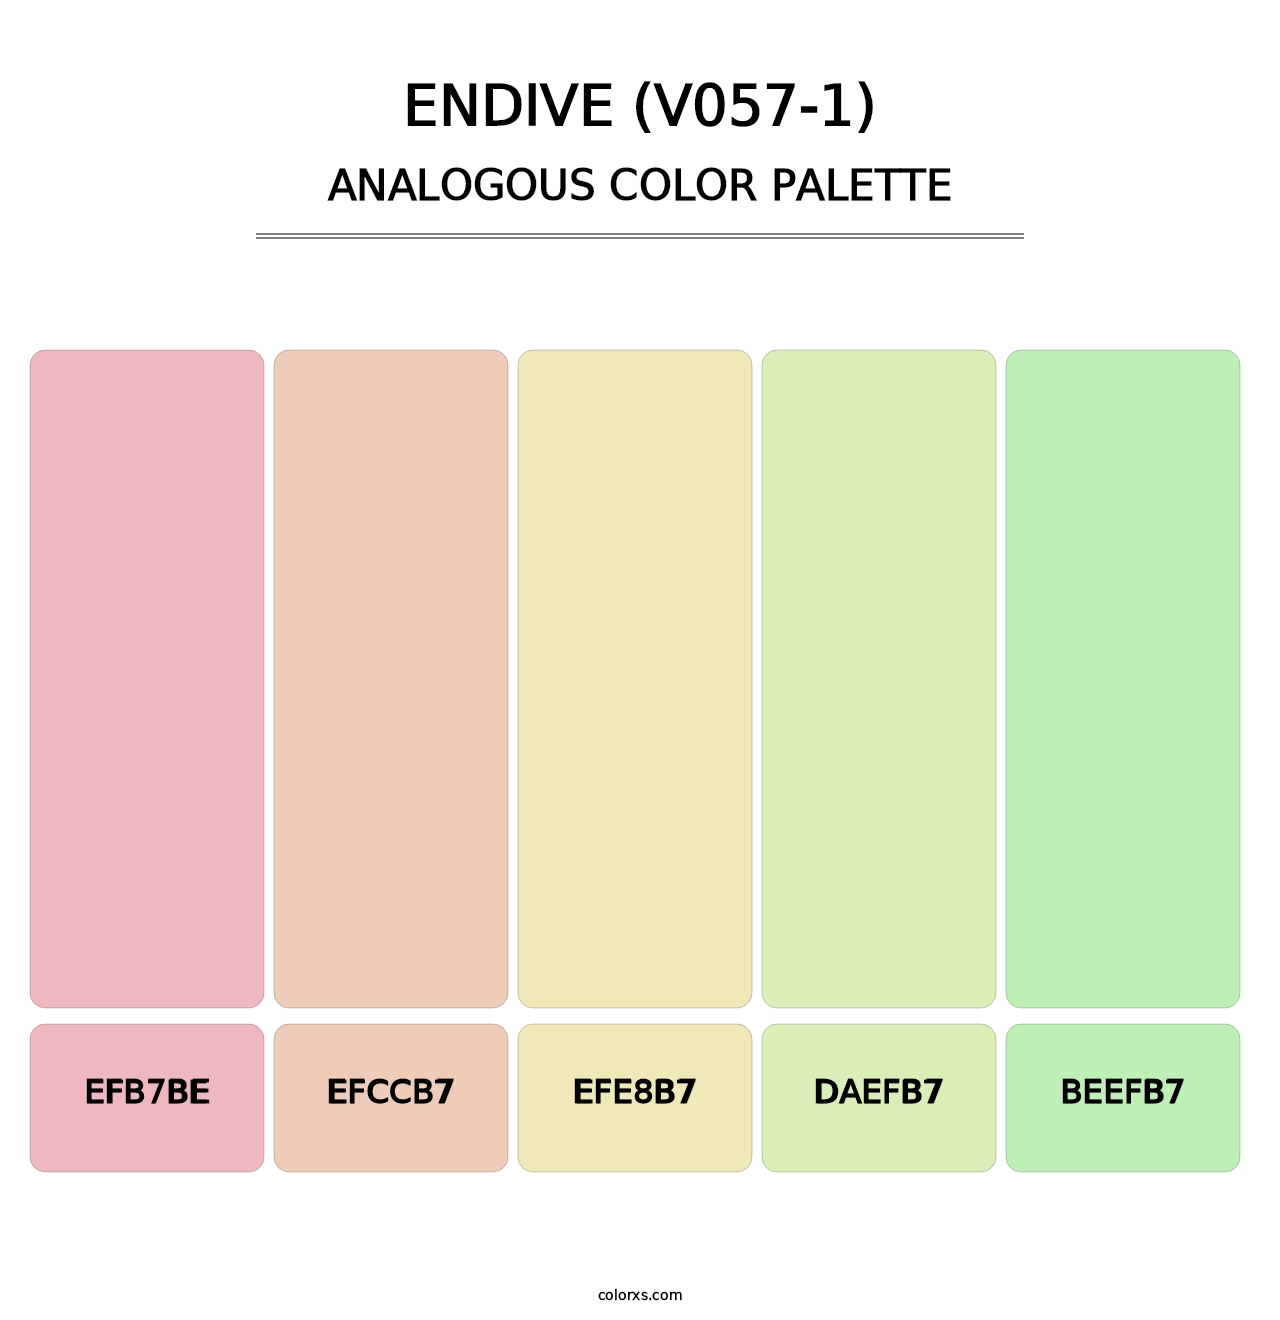 Endive (V057-1) - Analogous Color Palette